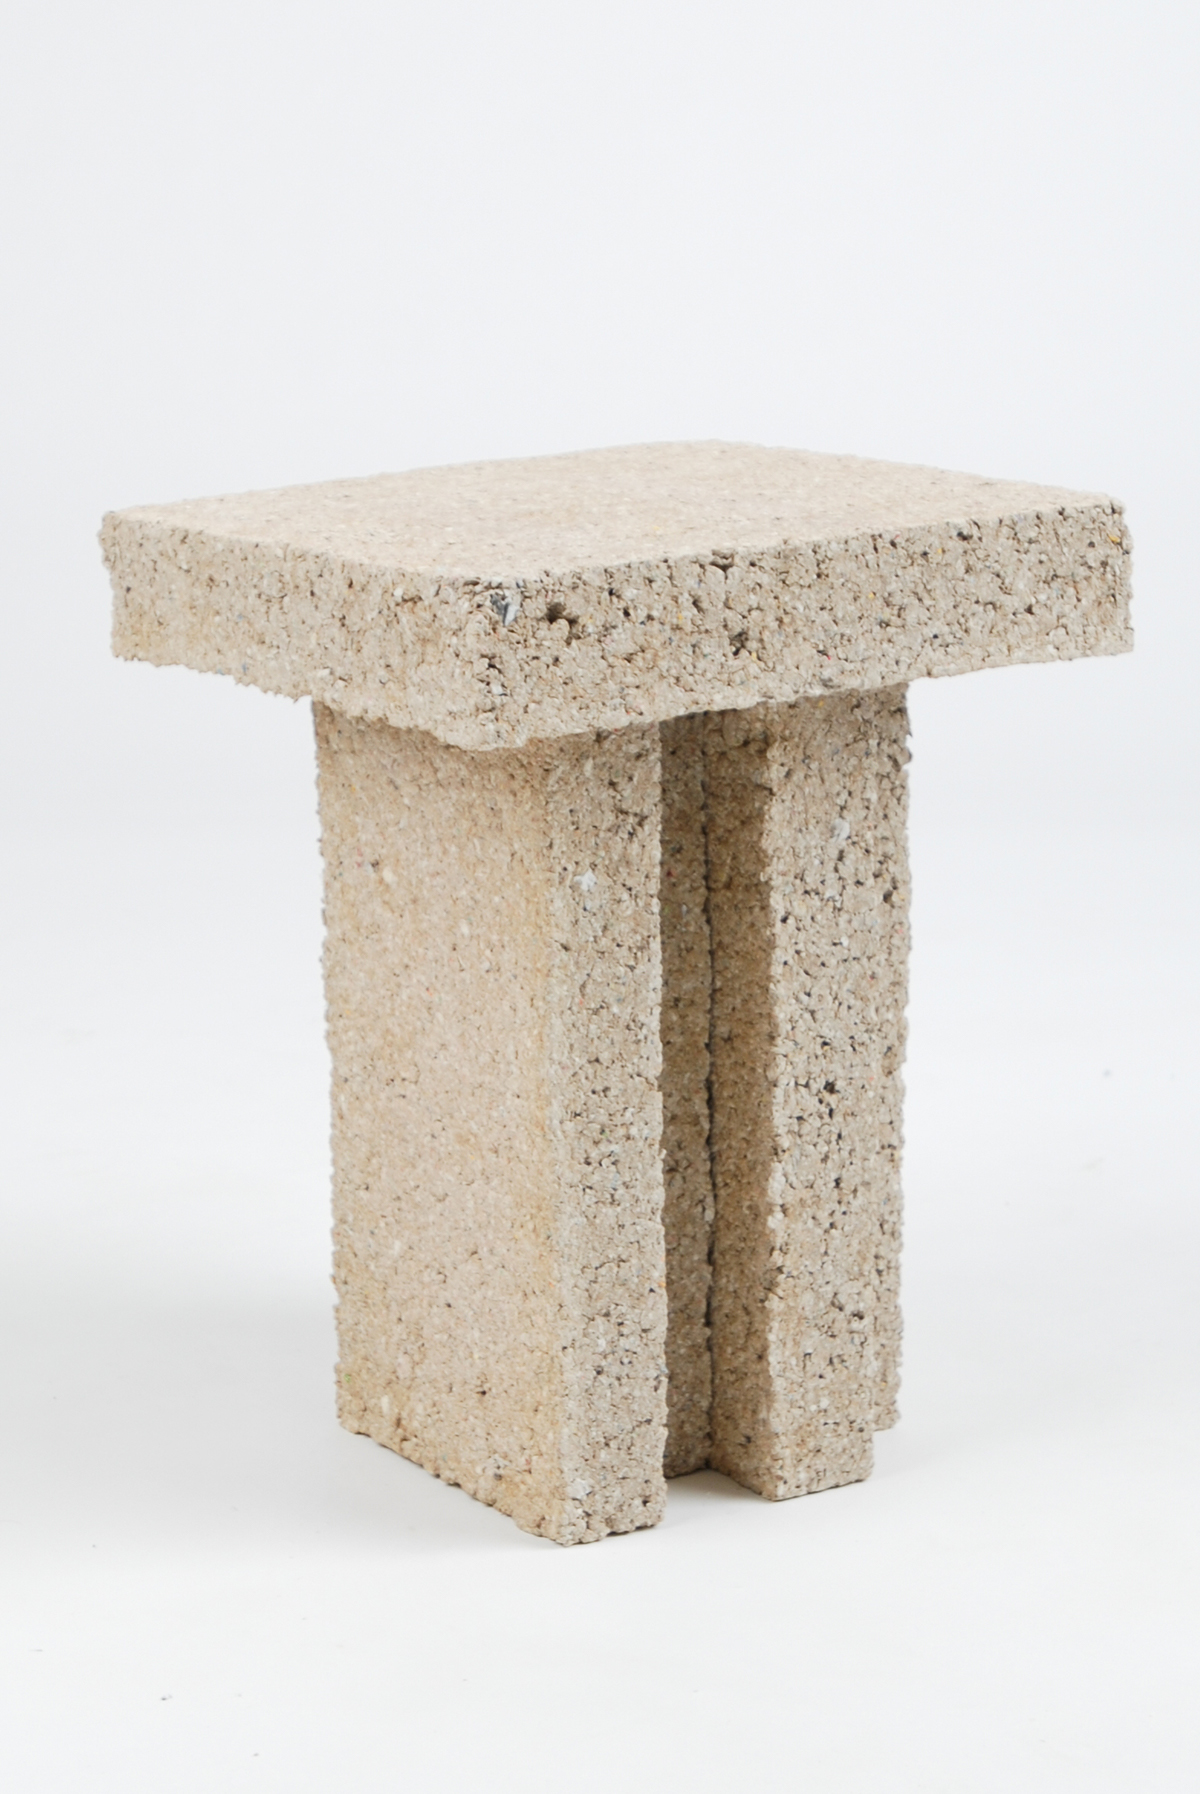 Wabi Sabi paper Cellulose Insulation wood glue chair stool